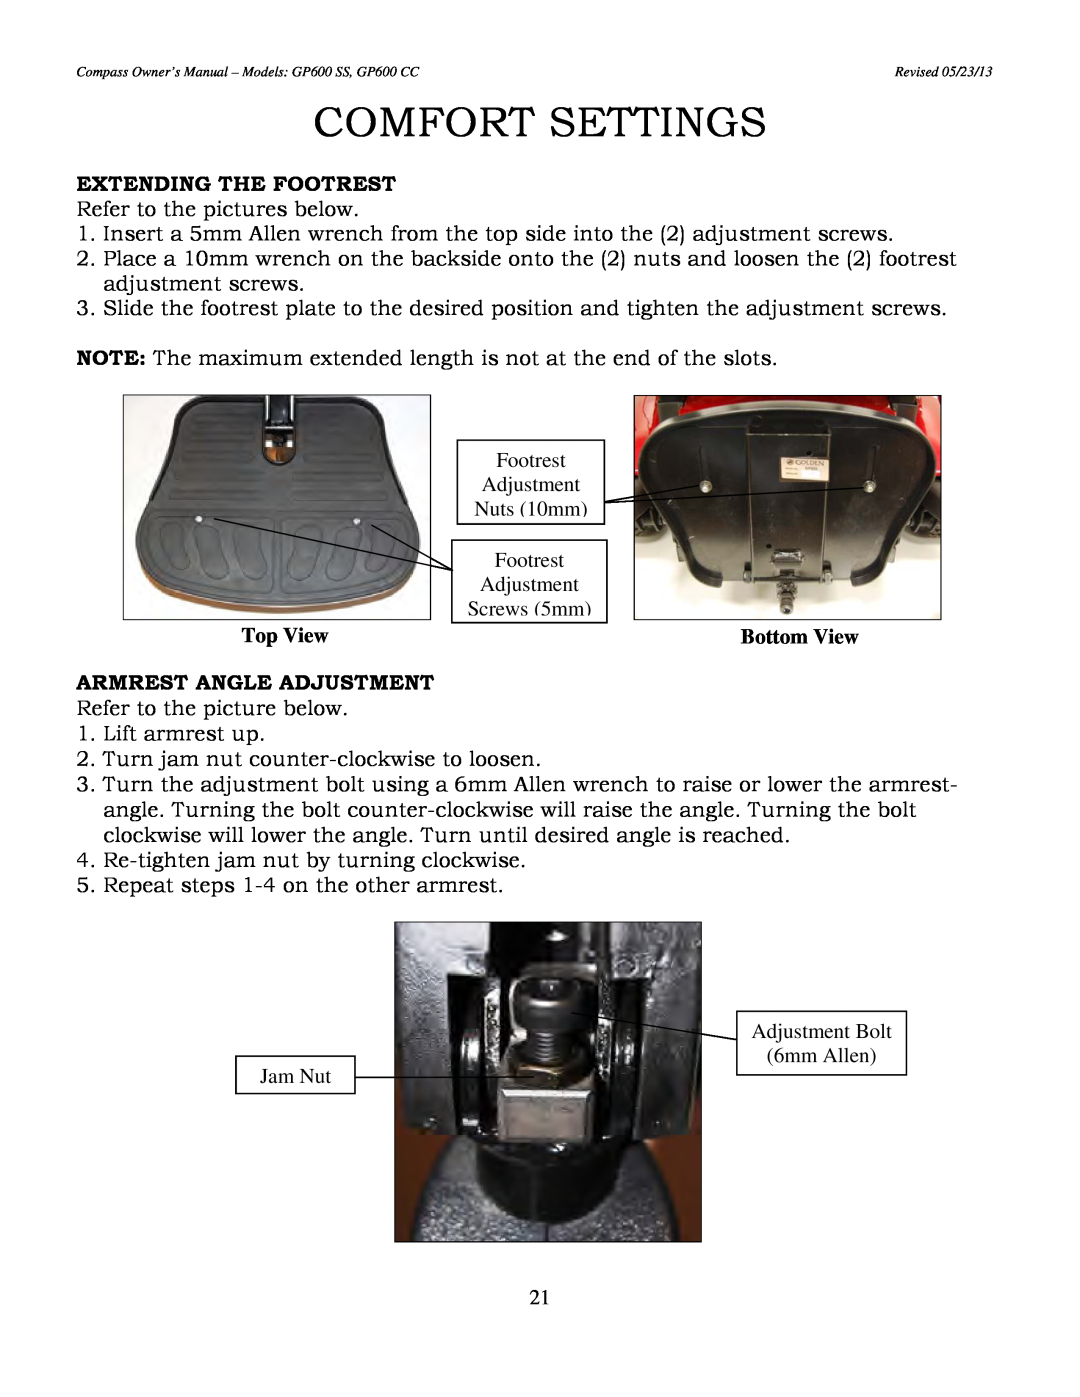 Golden Technologies GP600 CC Comfort Settings, Extending The Footrest, Top View, Bottom View, Armrest Angle Adjustment 